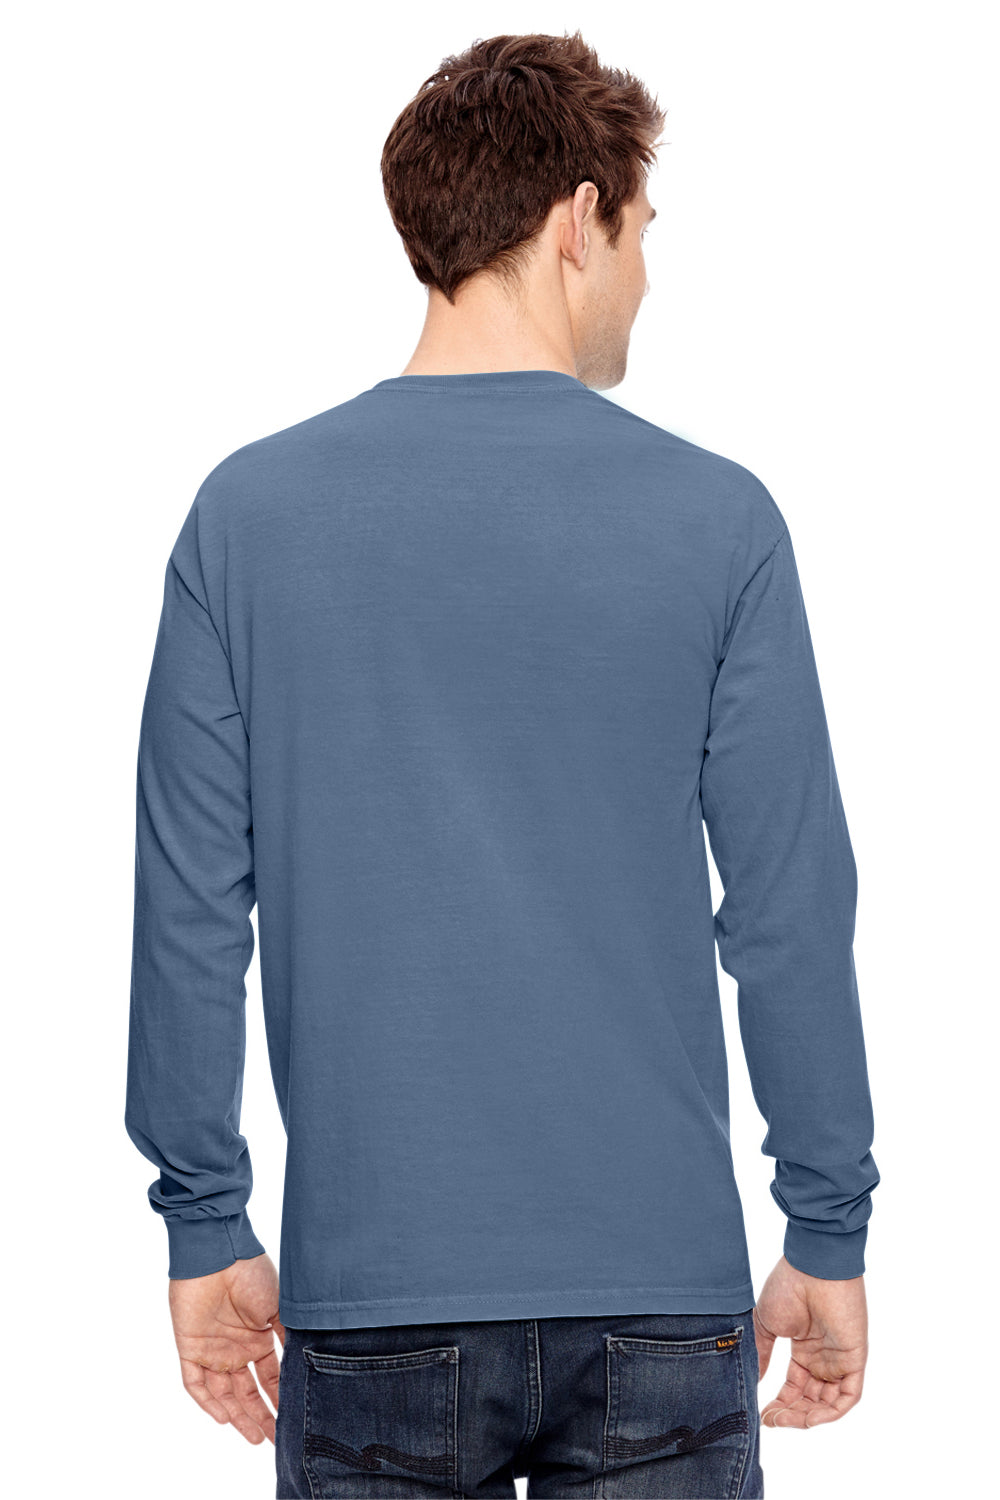 Comfort Colors C4410 Mens Long Sleeve Crewneck T-Shirt w/ Pocket Blue Jean Back